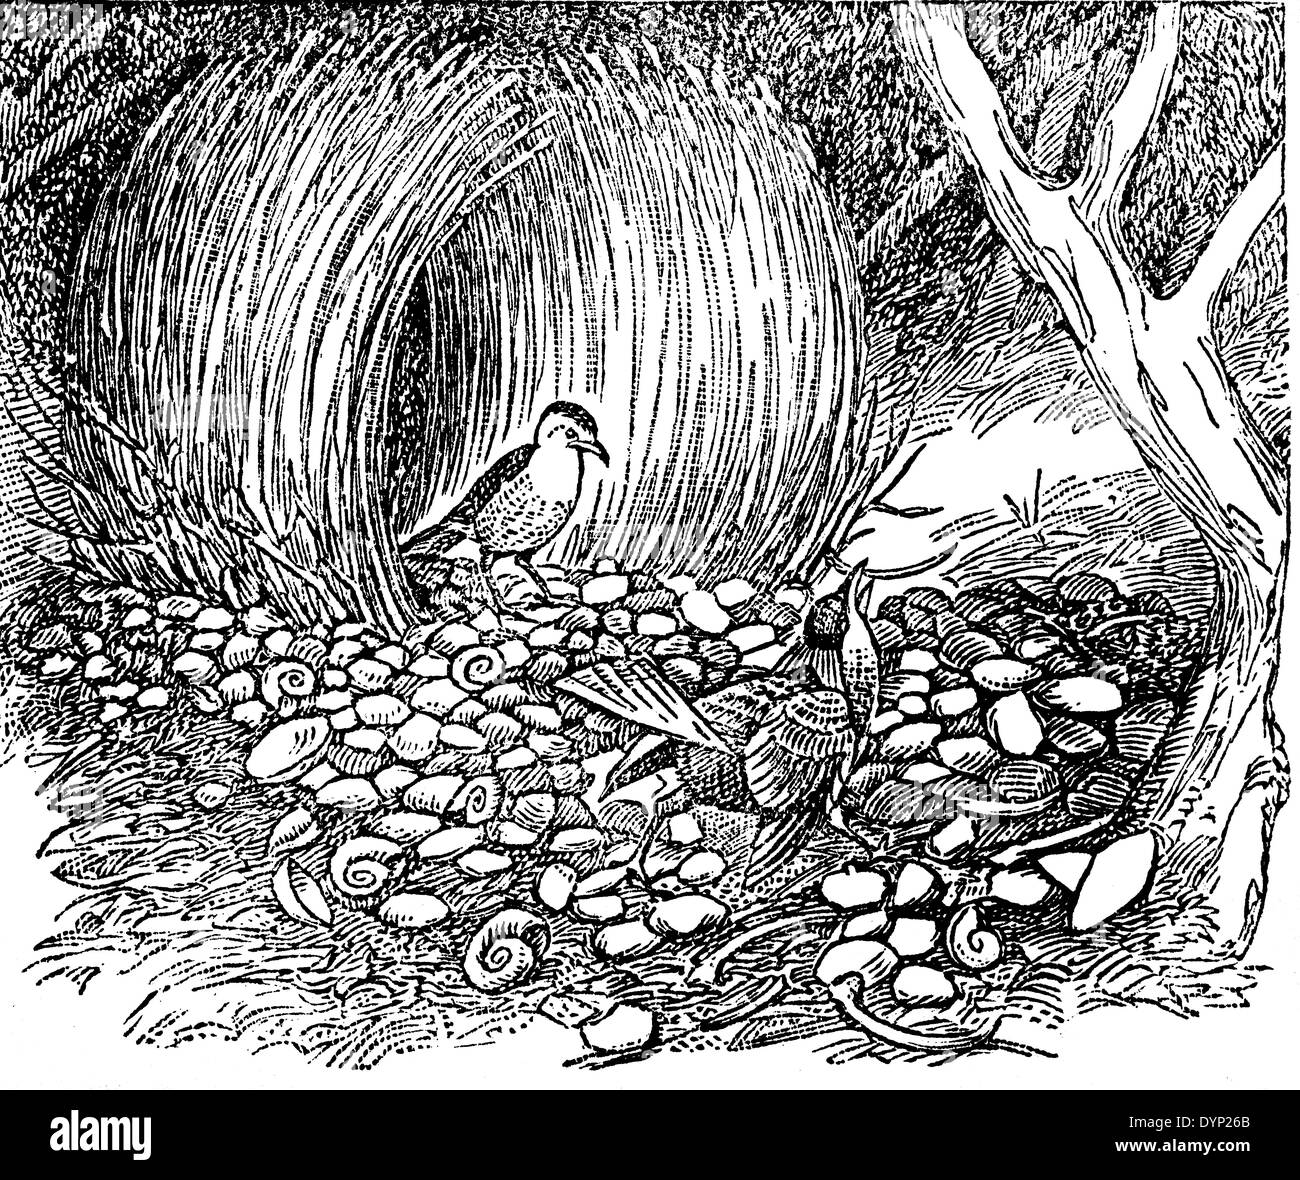 Spotted Bowerbird (Chlamydera maculata) at nest, illustration from Soviet encyclopedia, 1927 Stock Photo